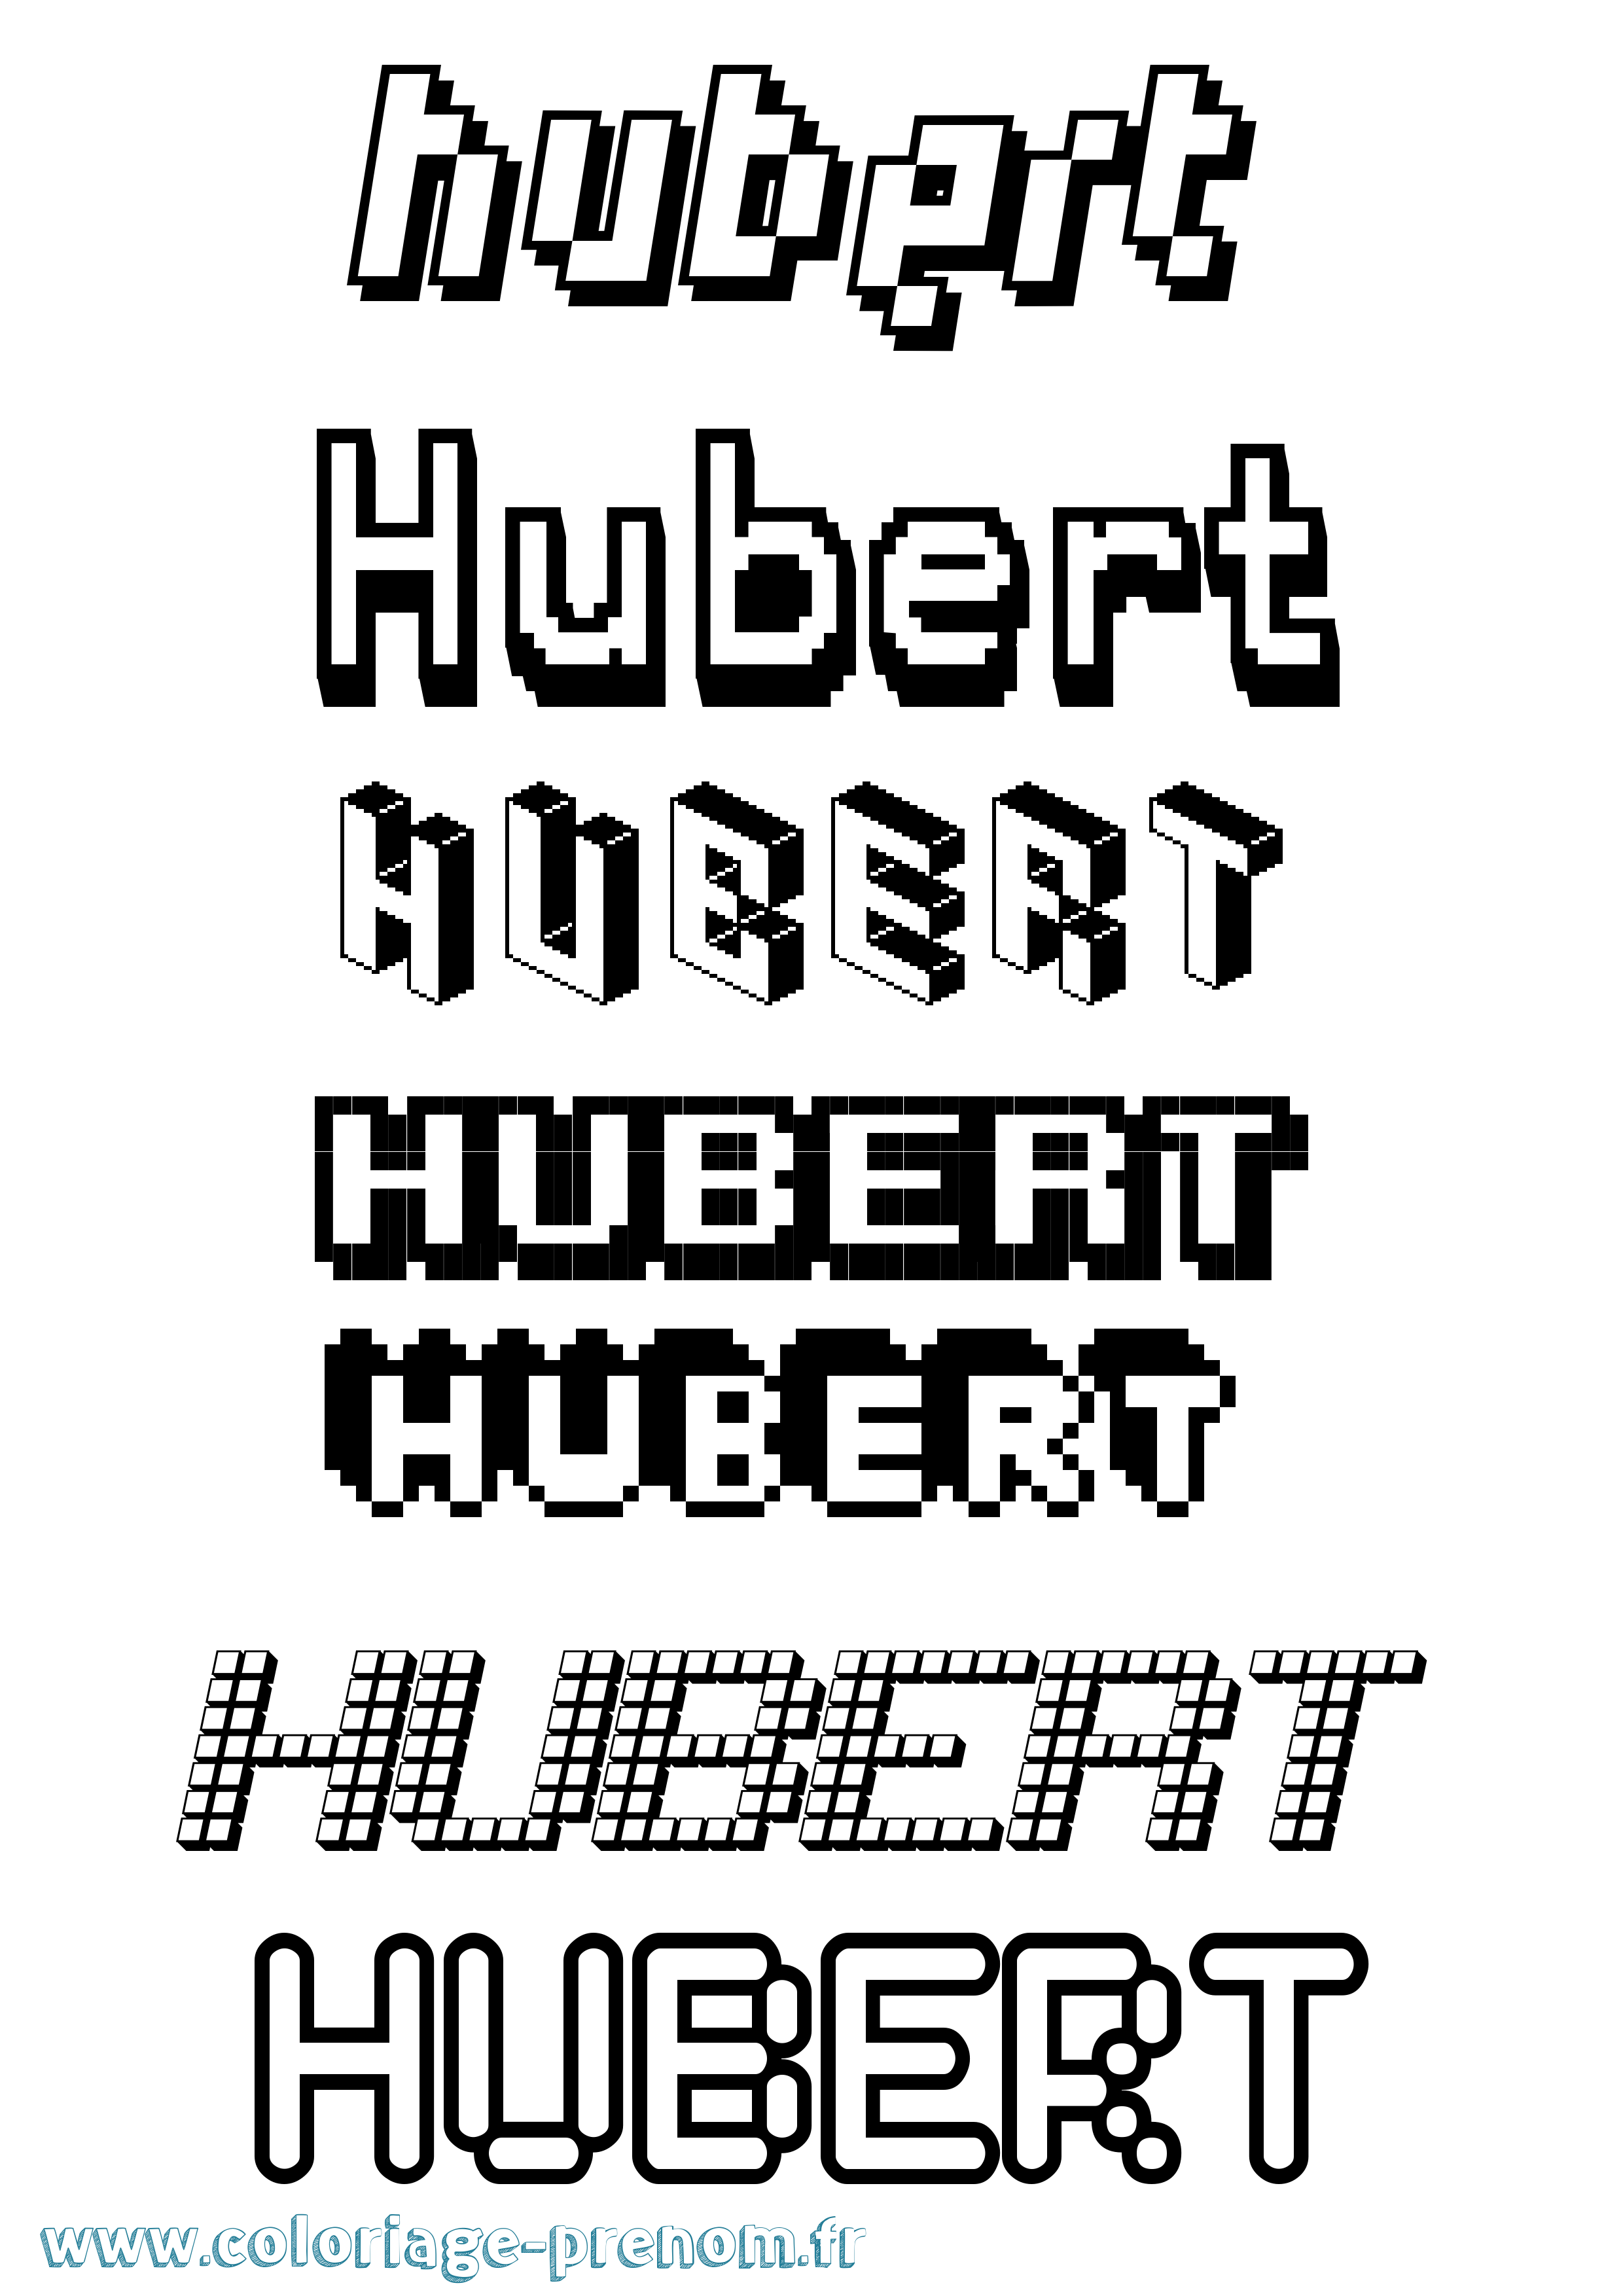 Coloriage prénom Hubert Pixel